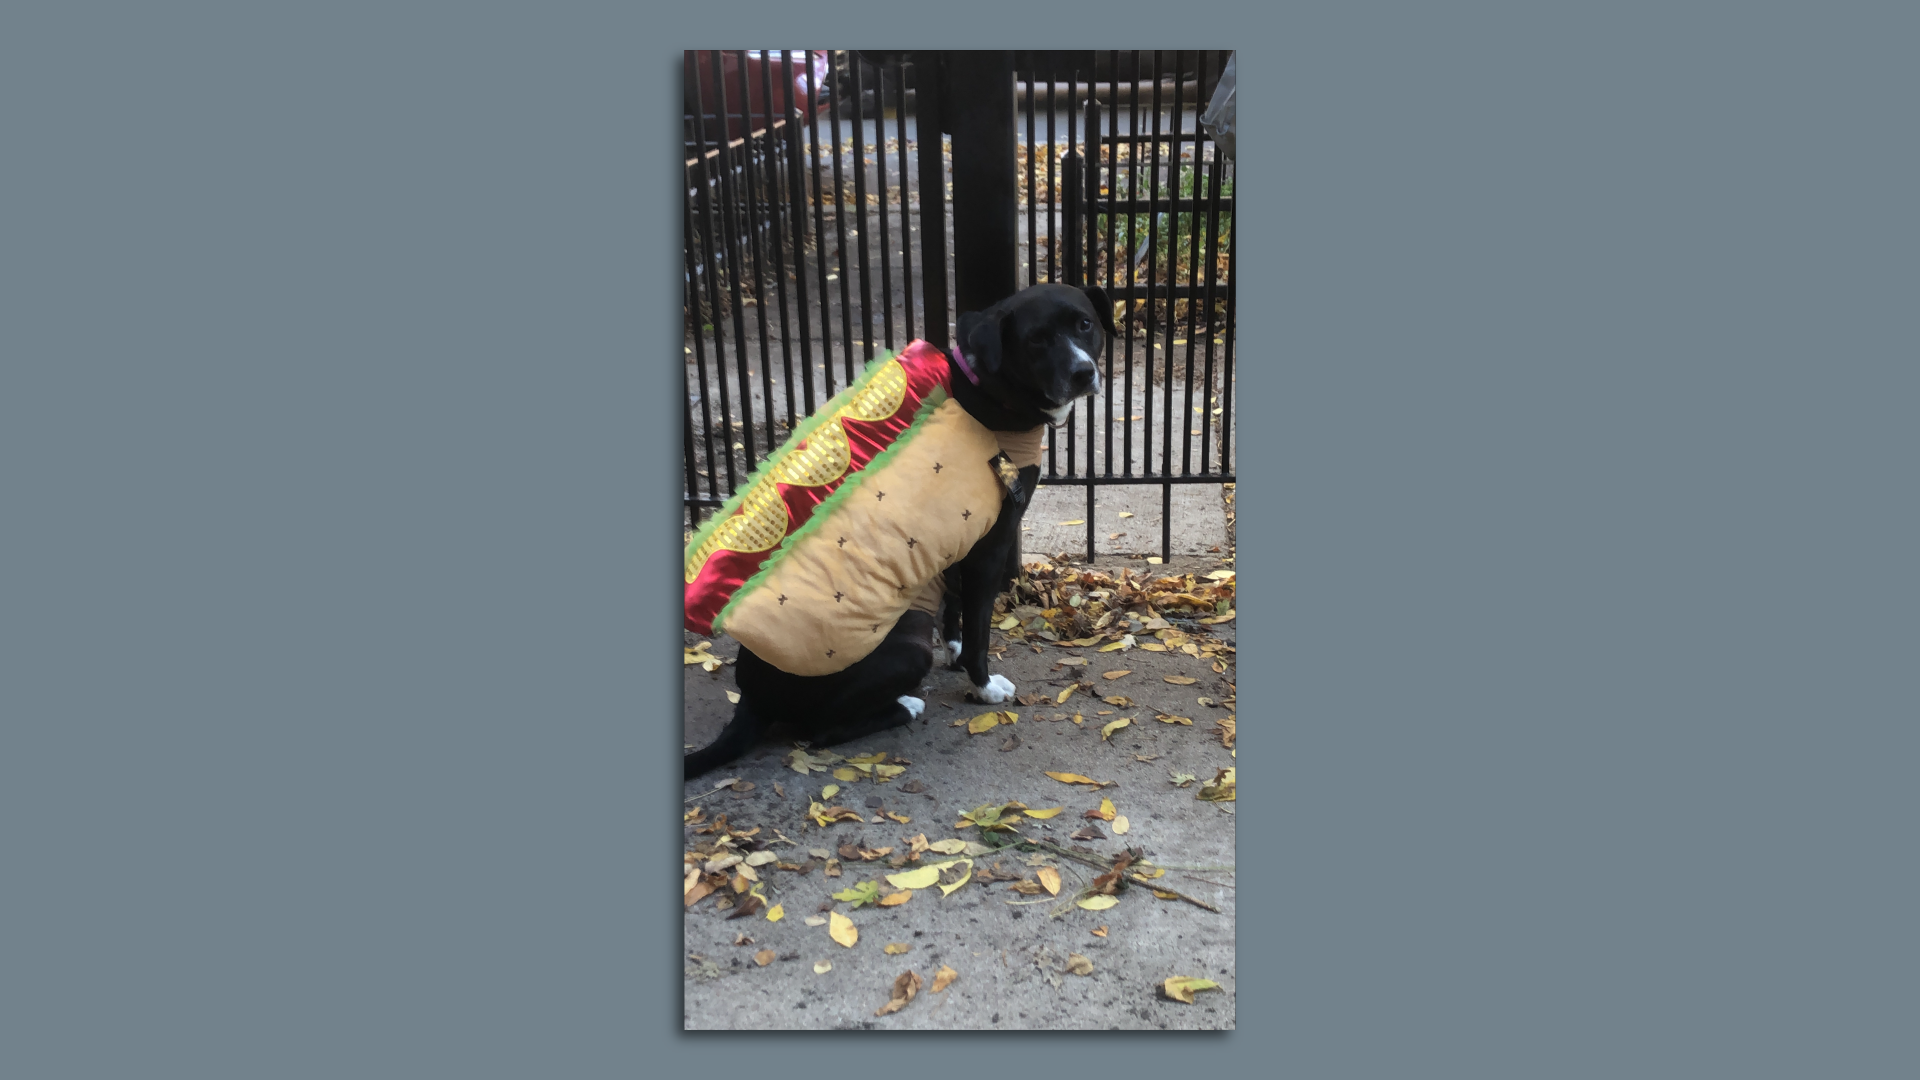 Dog dressed as a hot dog